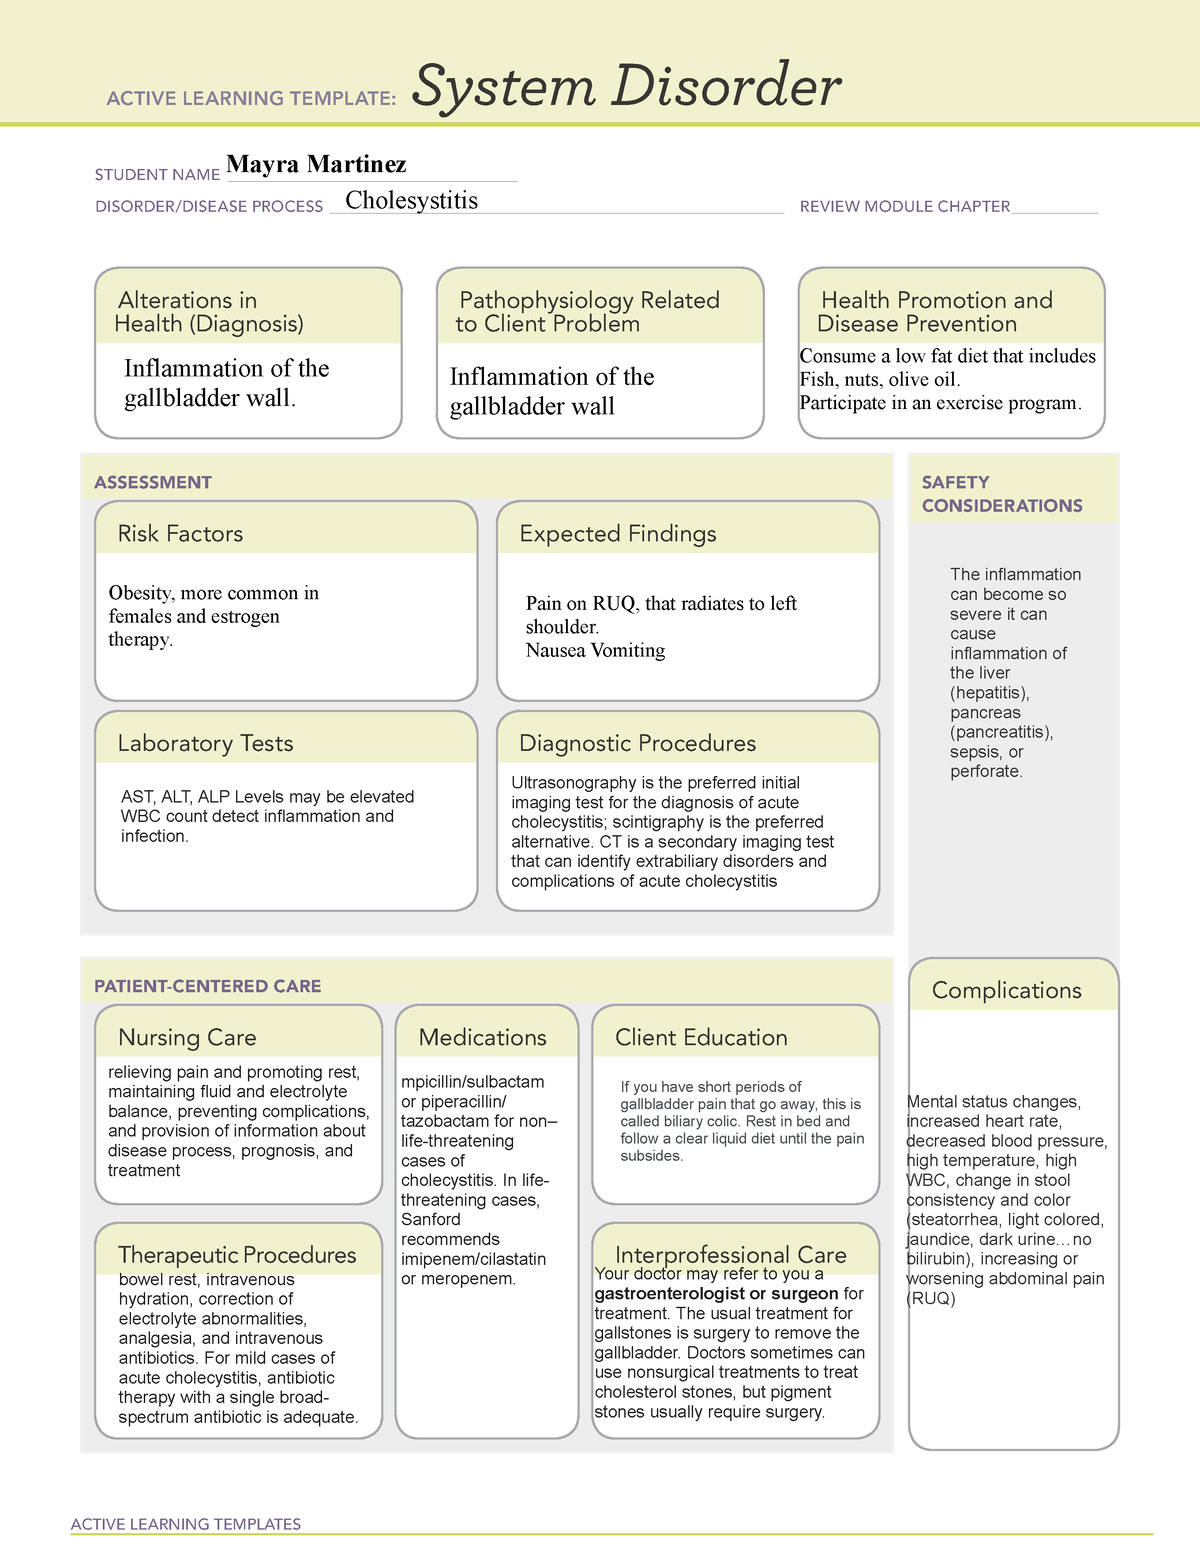 ati-system-disorder-pancreatitis-ati-active-learning-templates-system